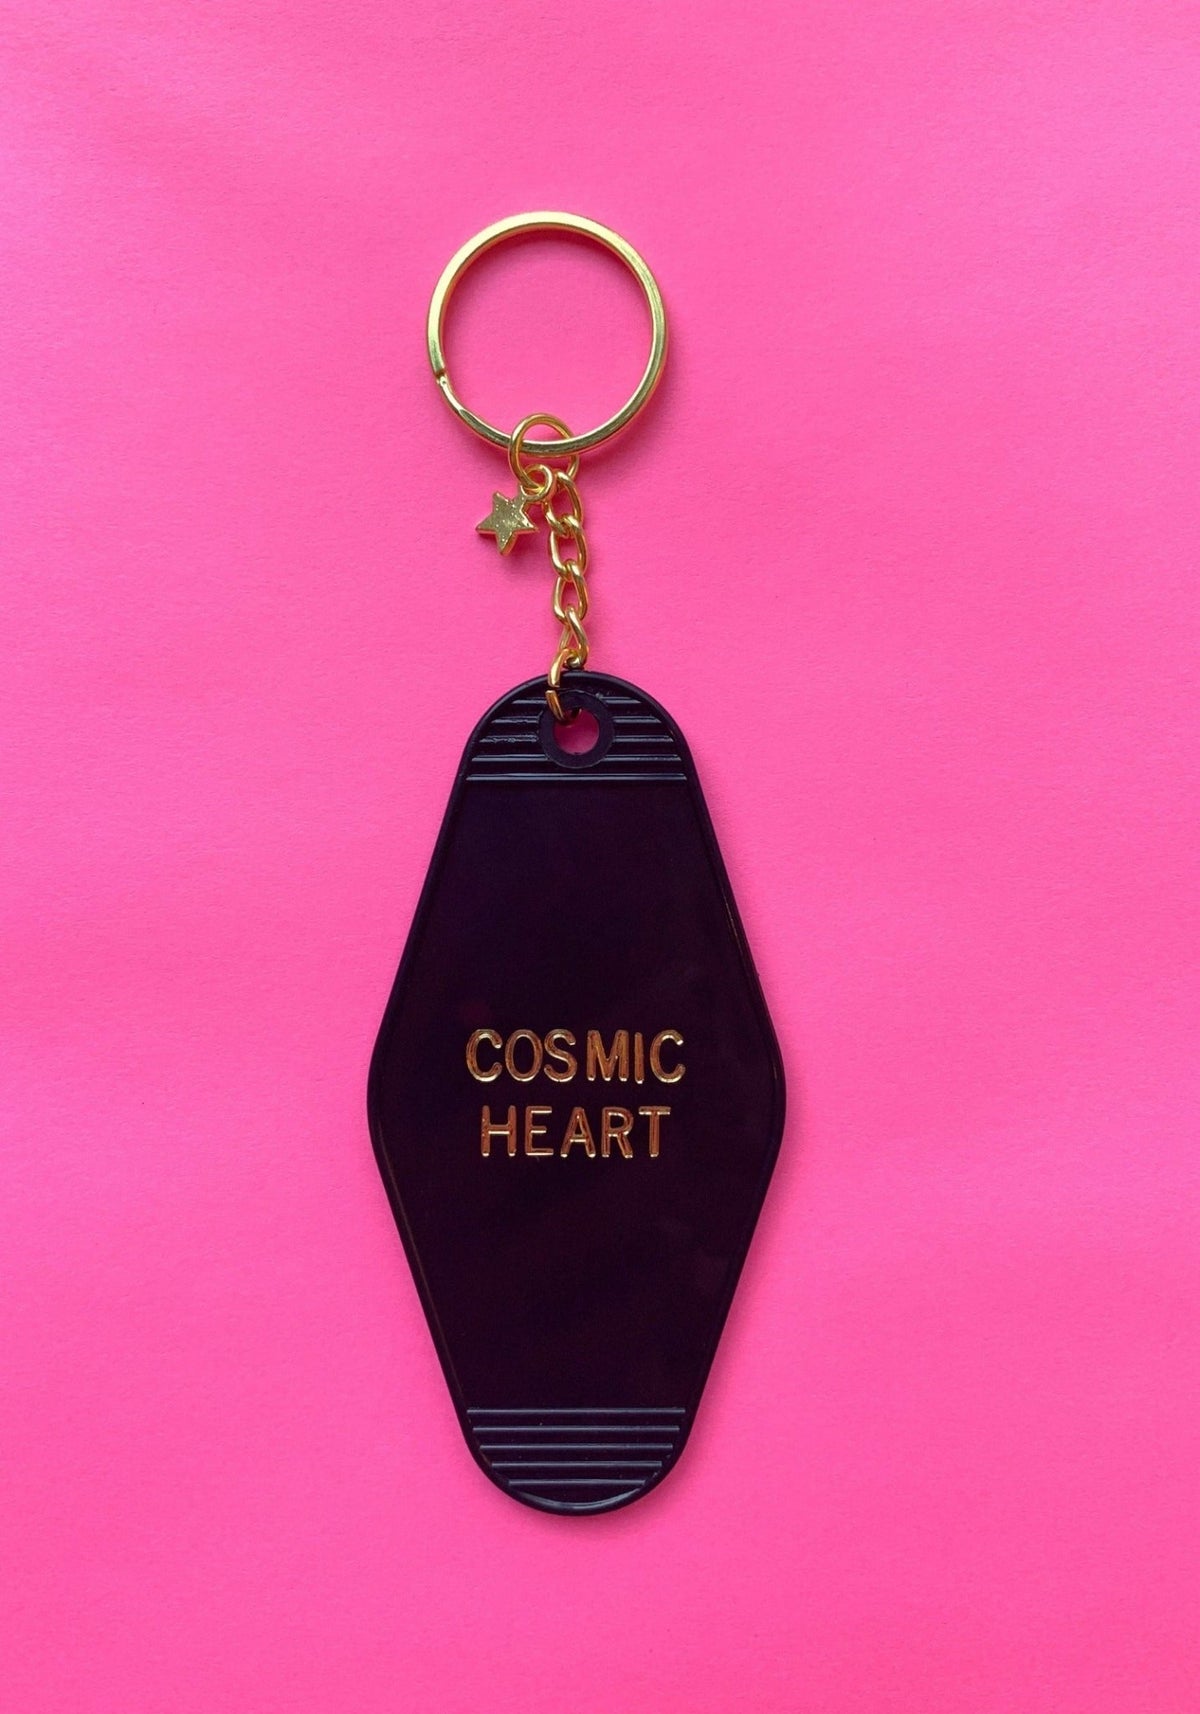 Cosmic Heart Keychain by kaeraz accessories accessory black gold